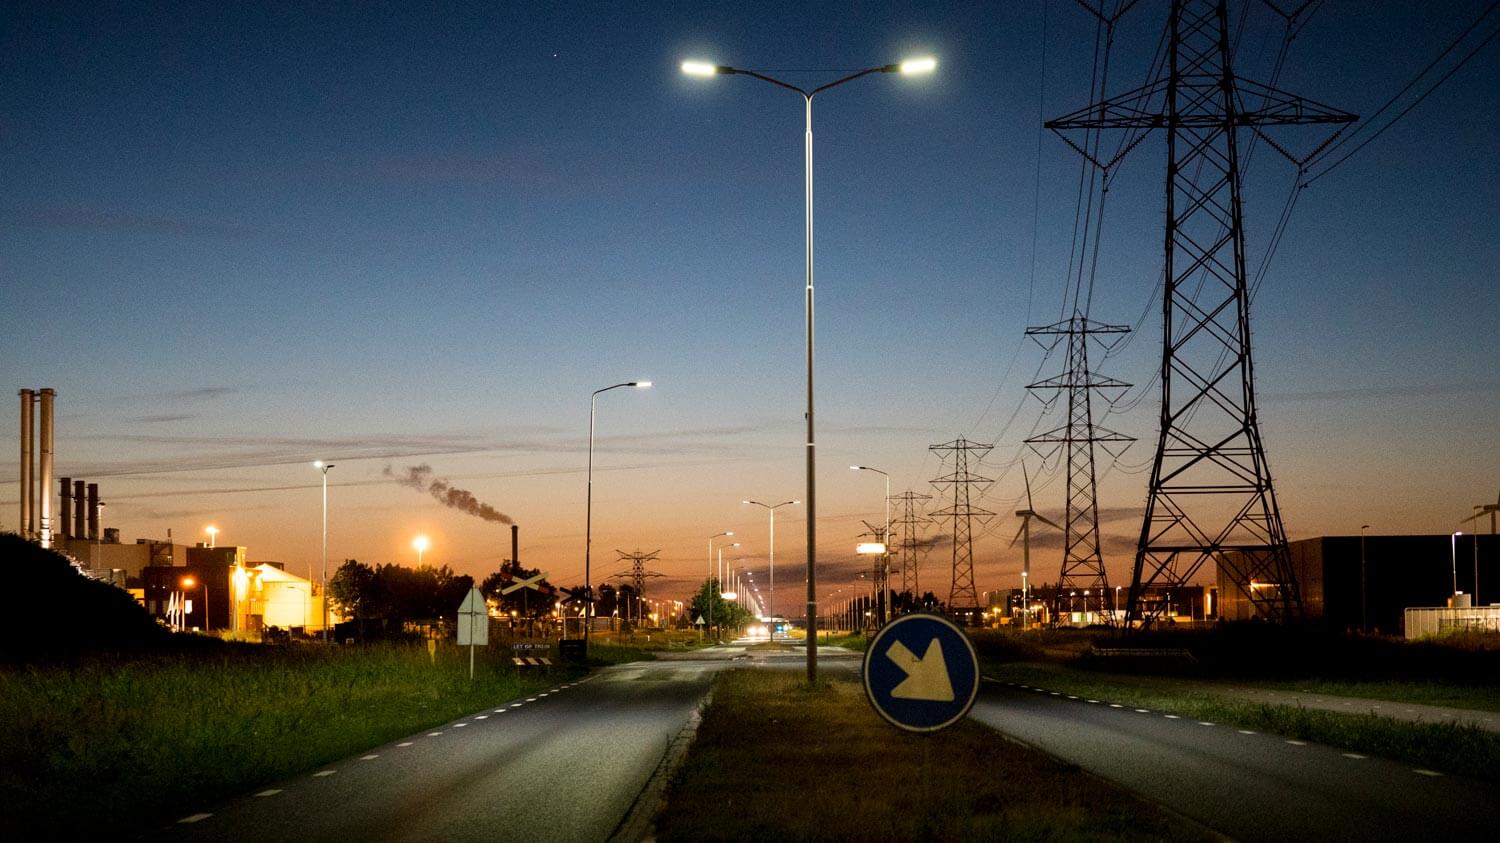 Intelligent Illumination at the Port of Moerdijk